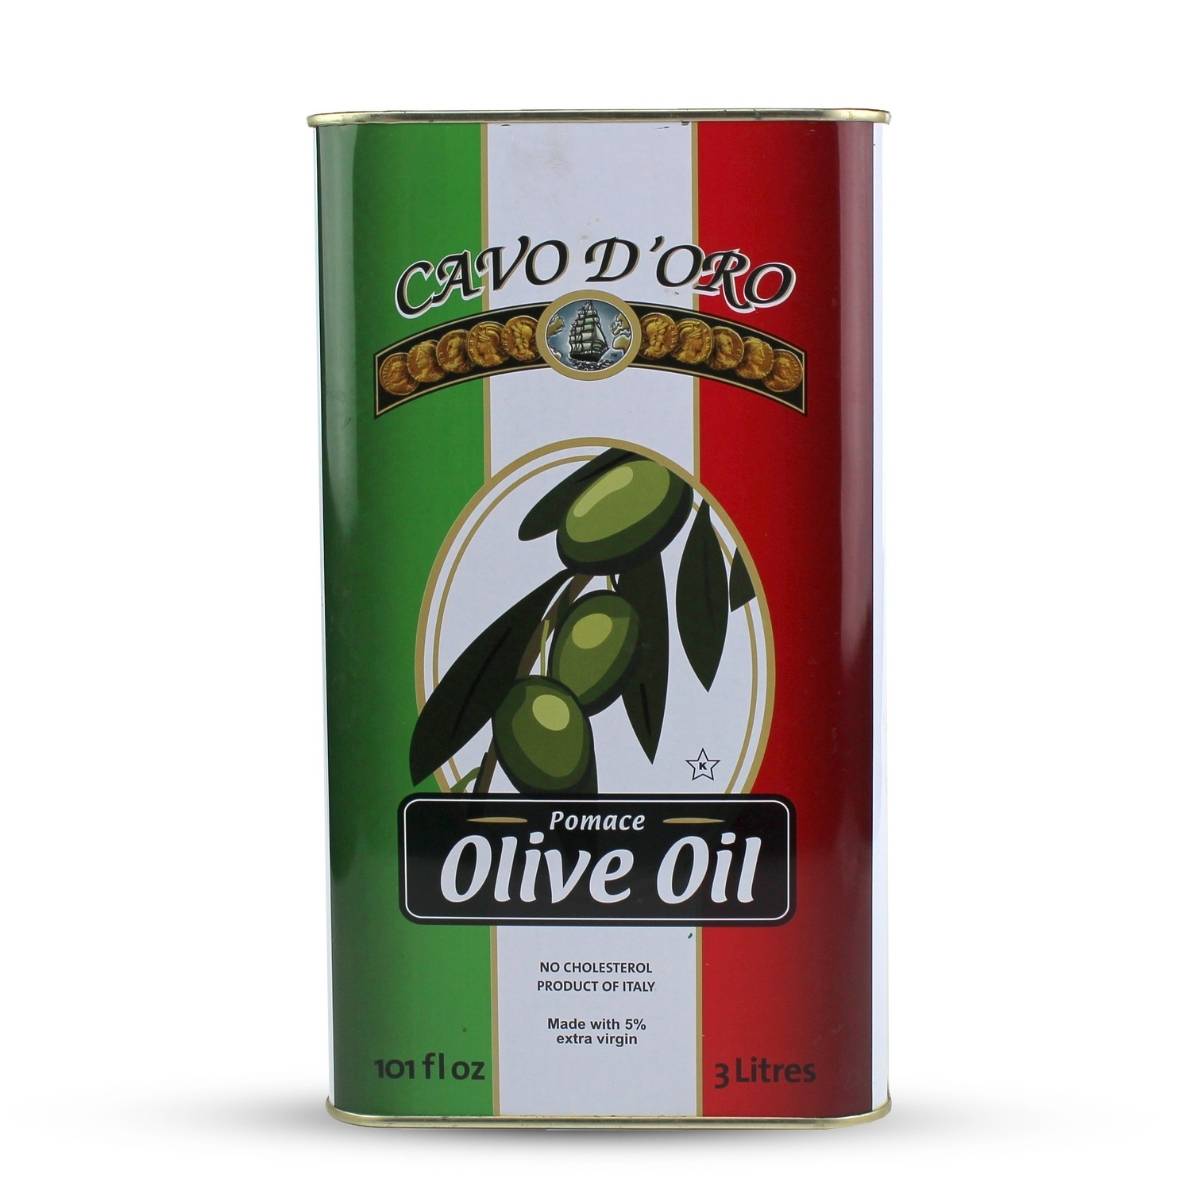 Cavo D'oro Pomace Olive Oil 3 liters